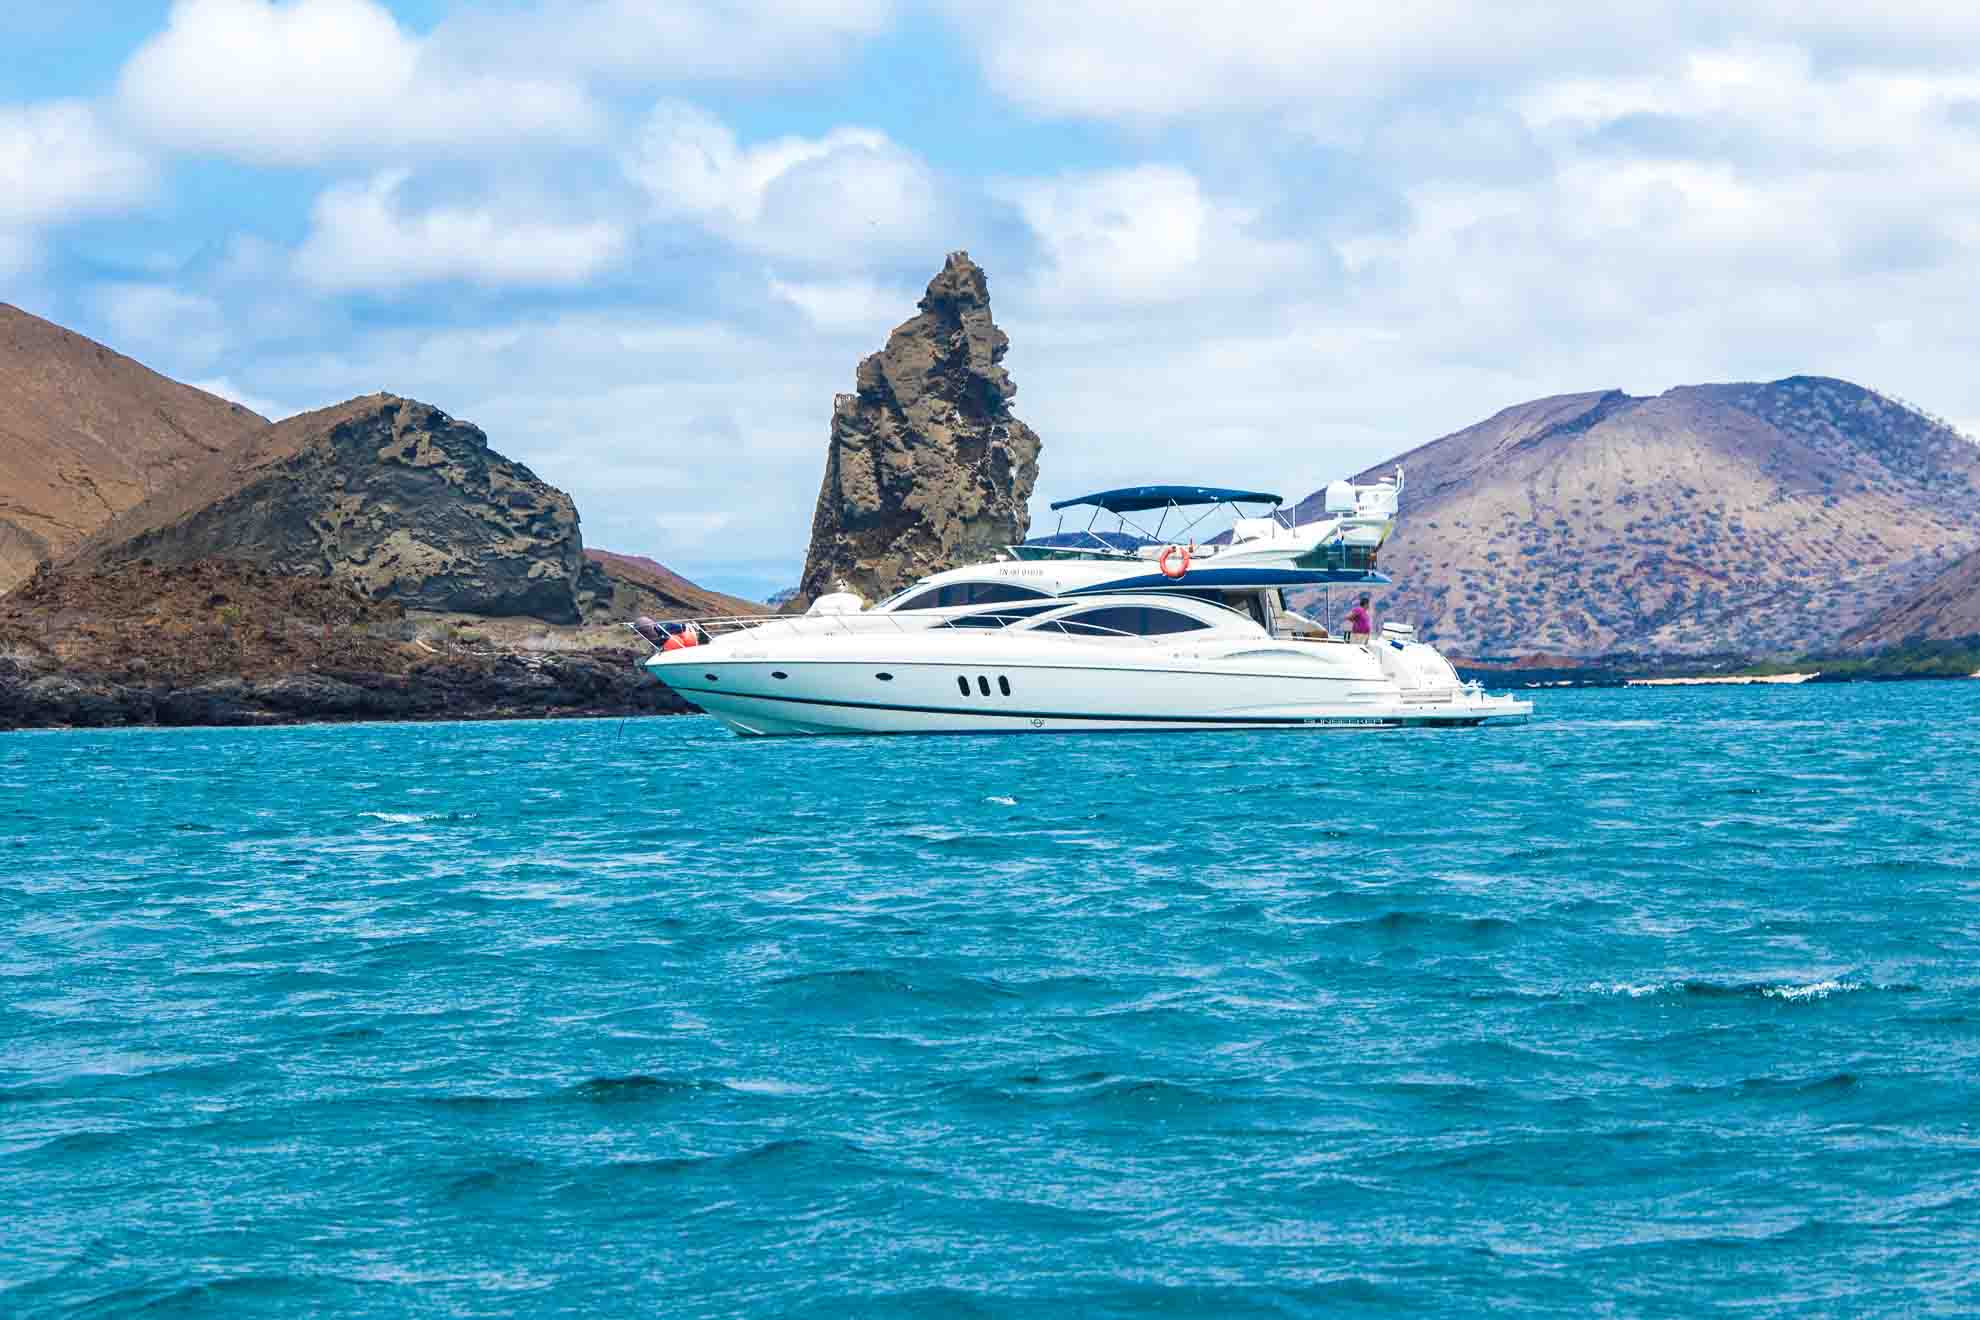 Galapagos yacht | Kicker rock